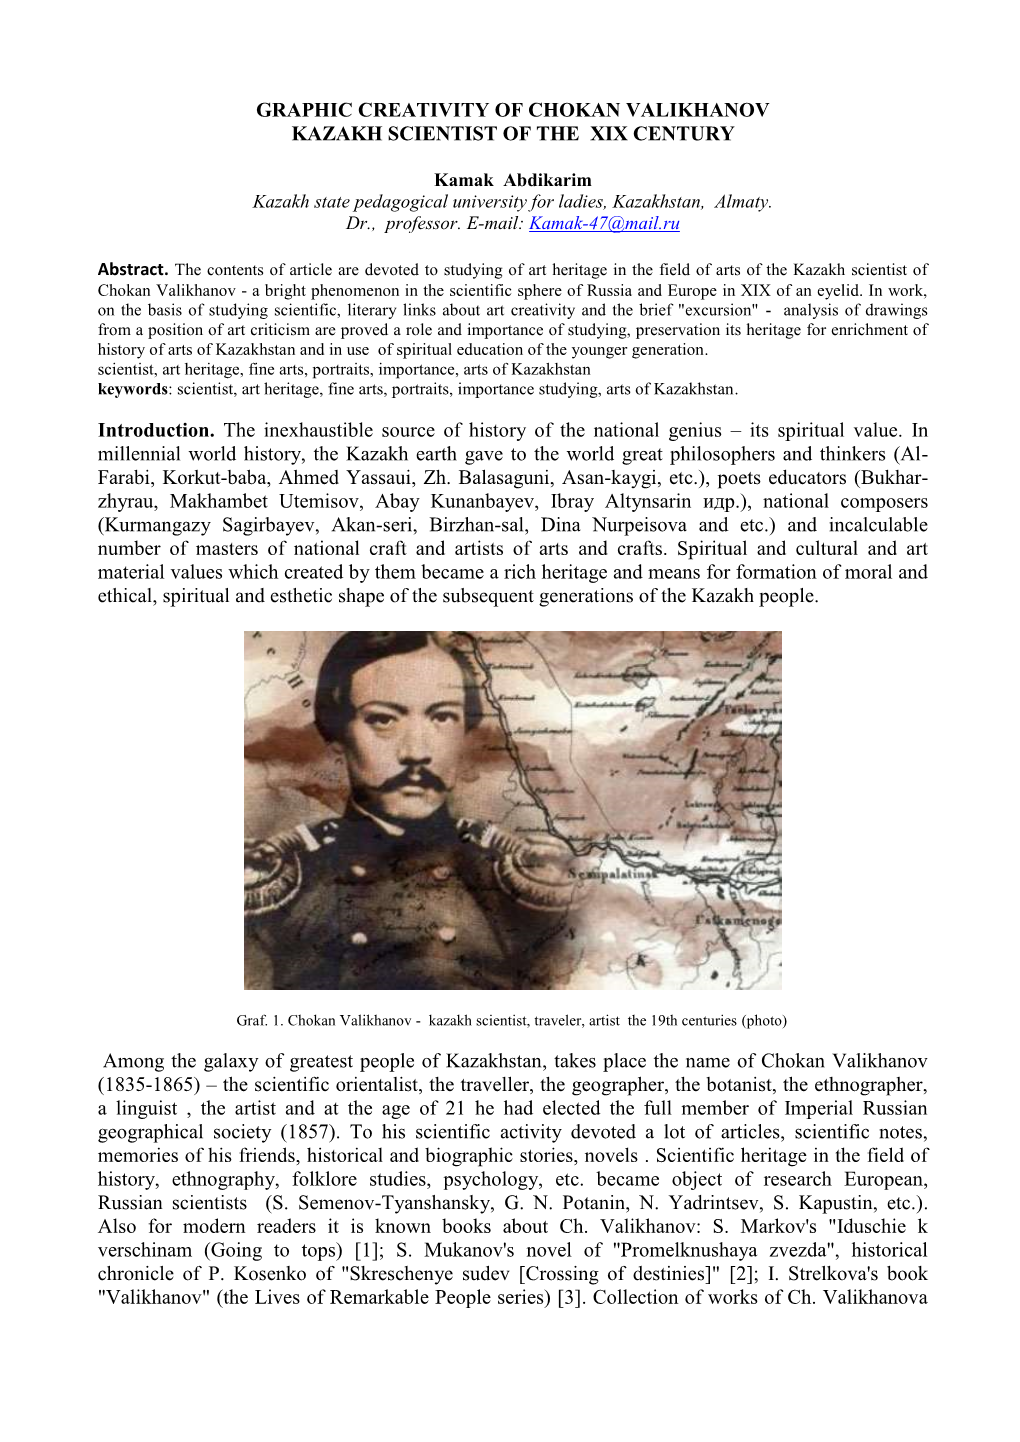 GRAPHIC CREATIVITY of CHOKAN VALIKHANOV KAZAKH SCIENTIST of the ХІХ CENTURY Introduction. the Inexhaustible Source of Histor